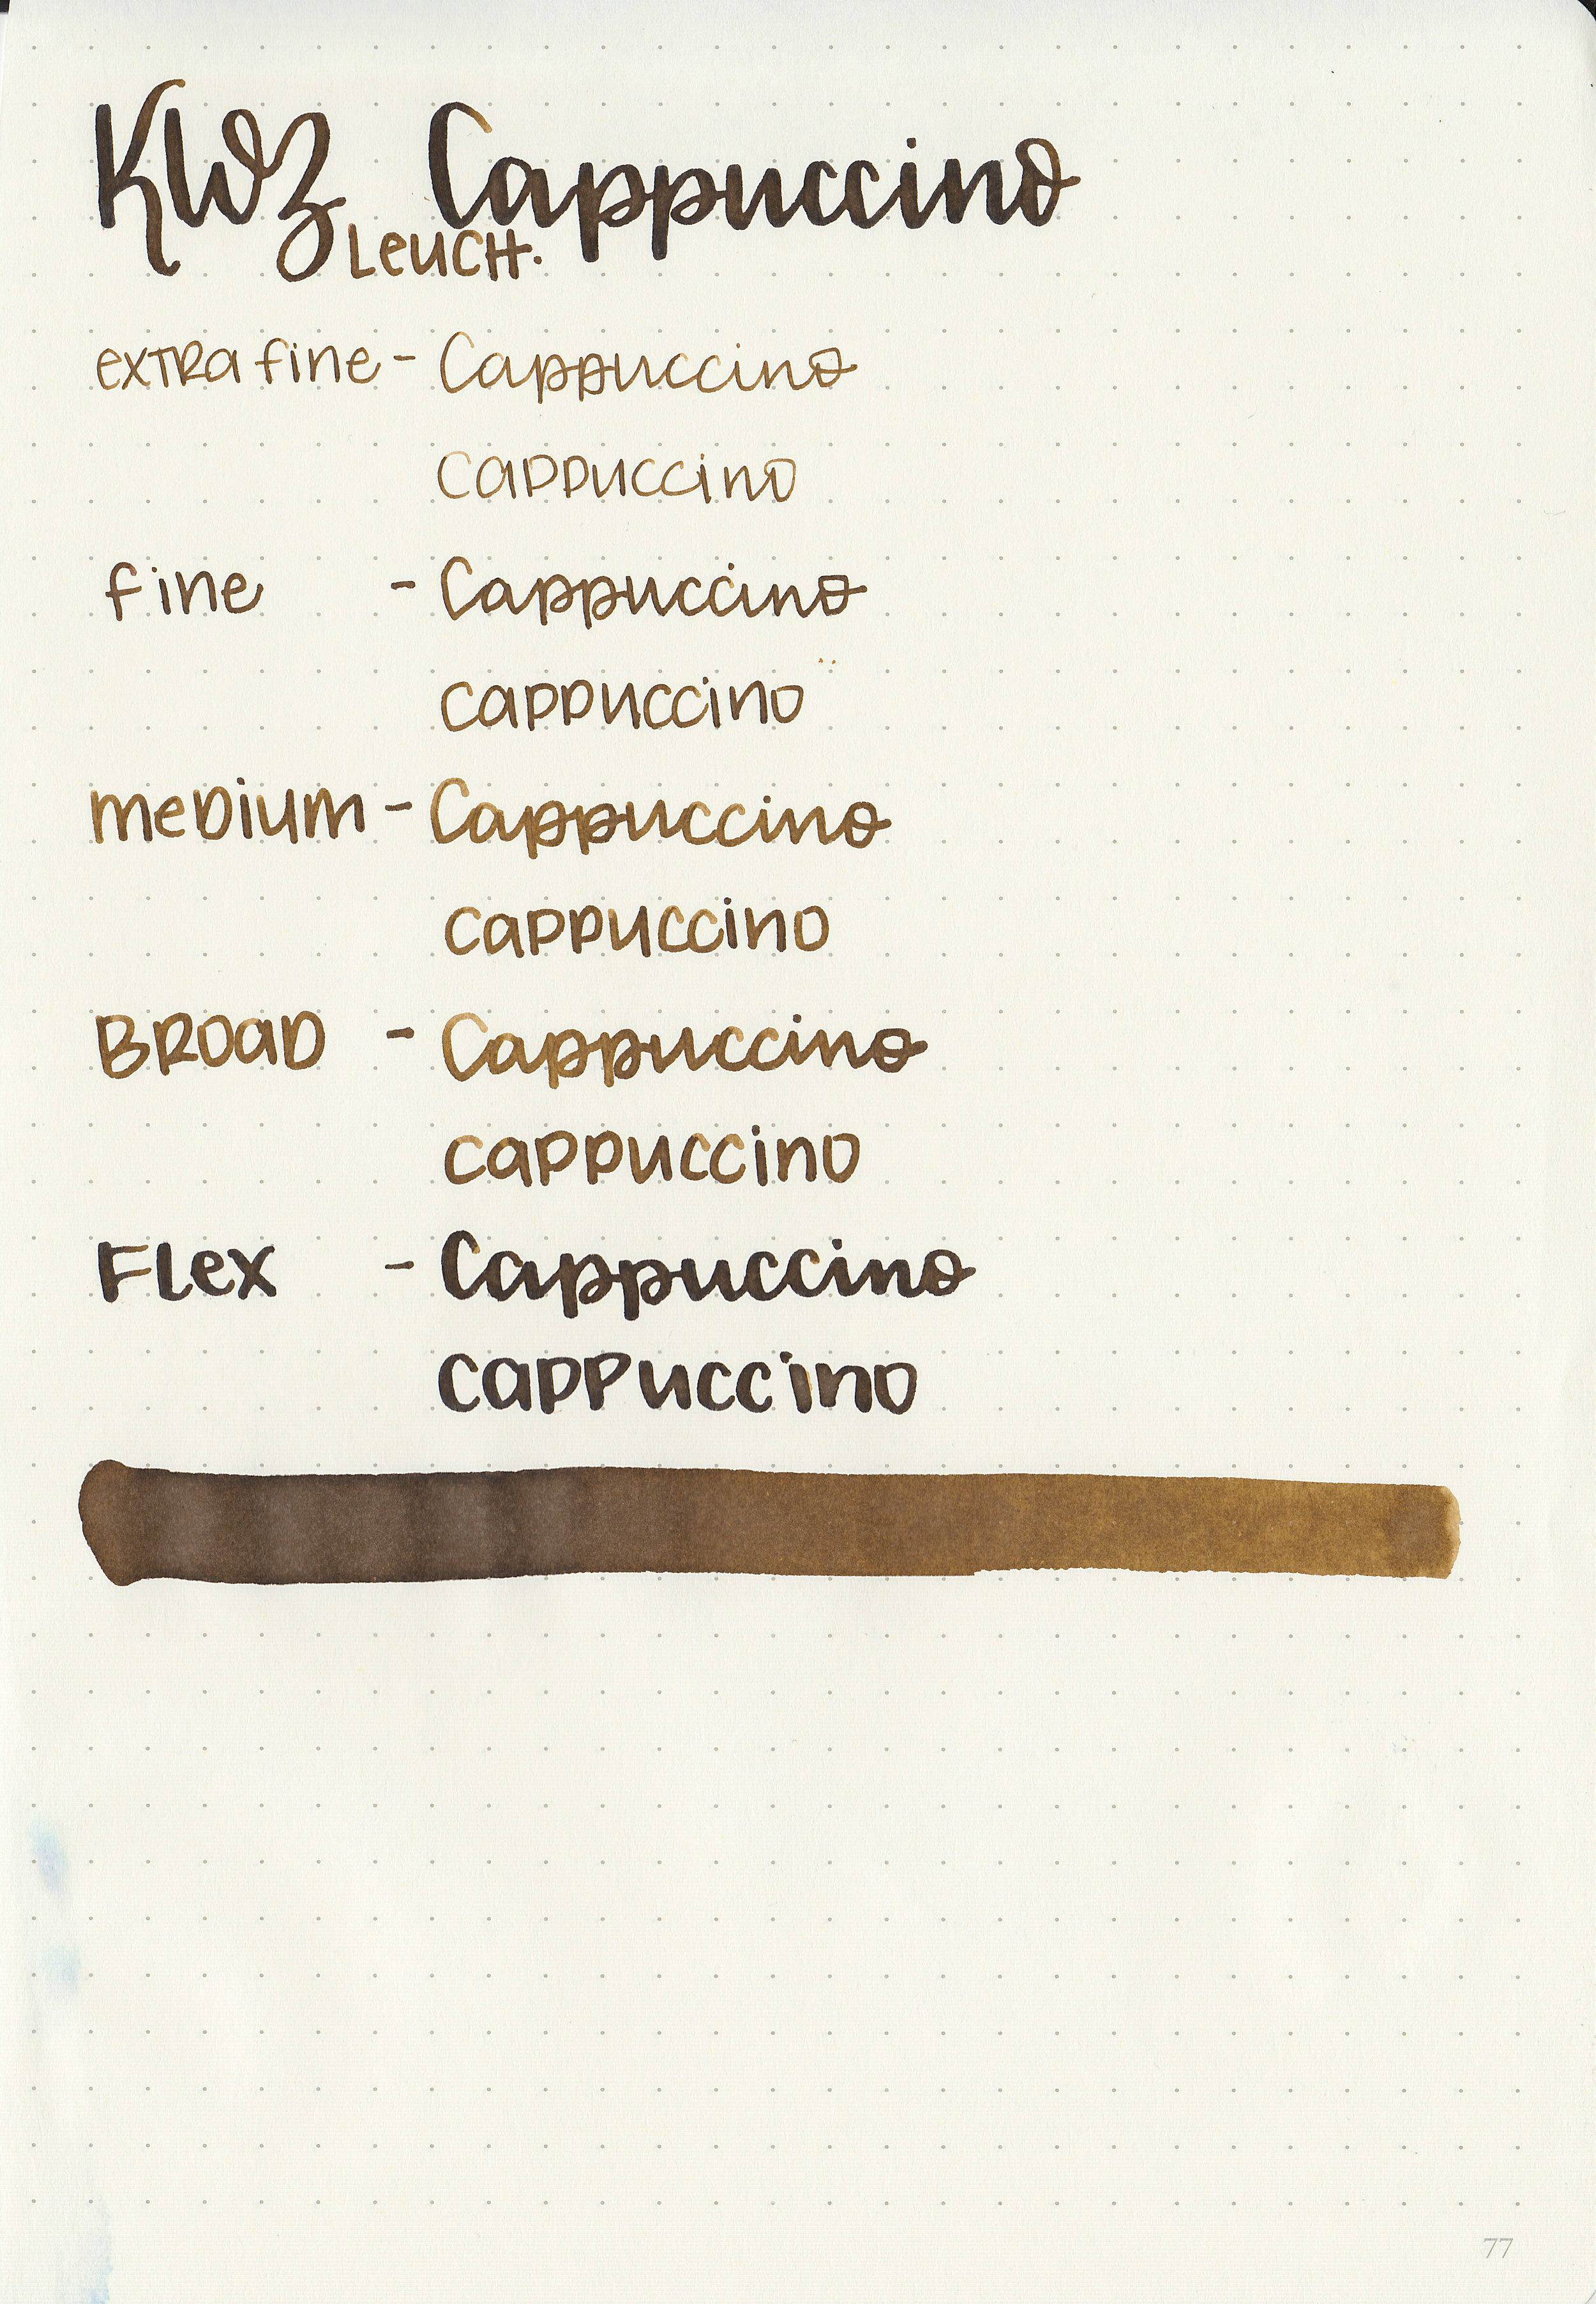 kwz-cappuccino-7.jpg